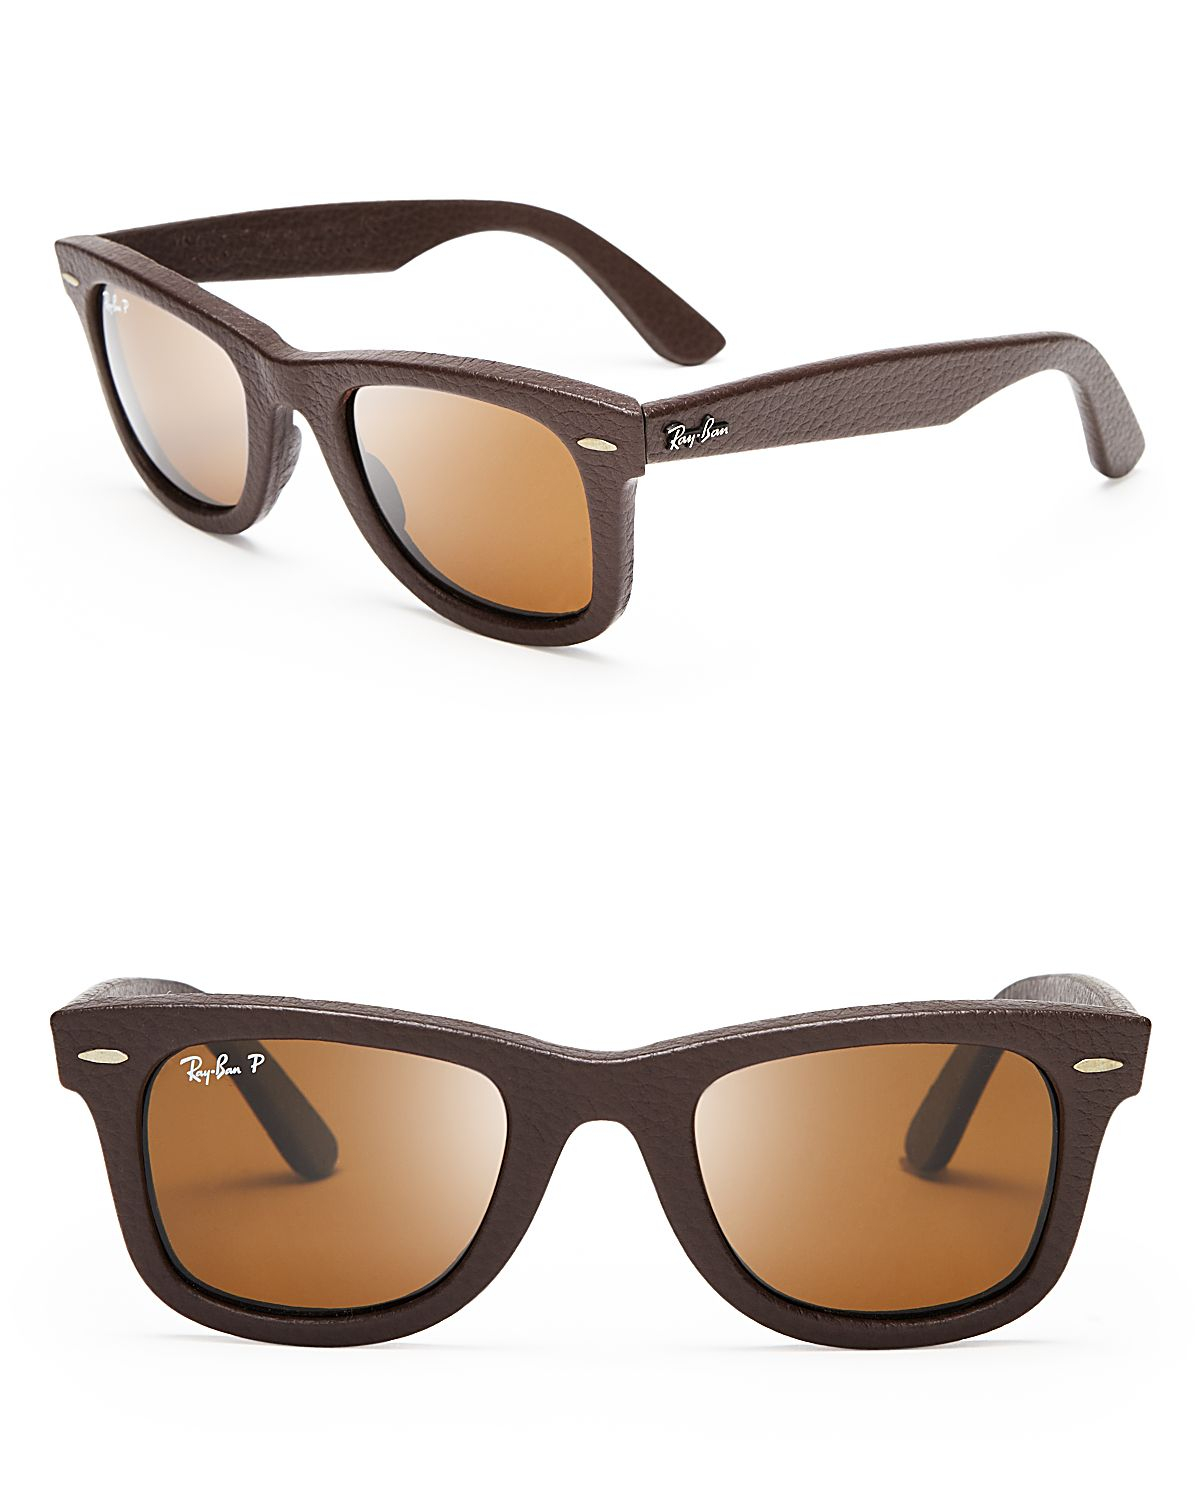 RayBan Polarized Leather Wayfarer Sunglasses in Brown Leather (Brown